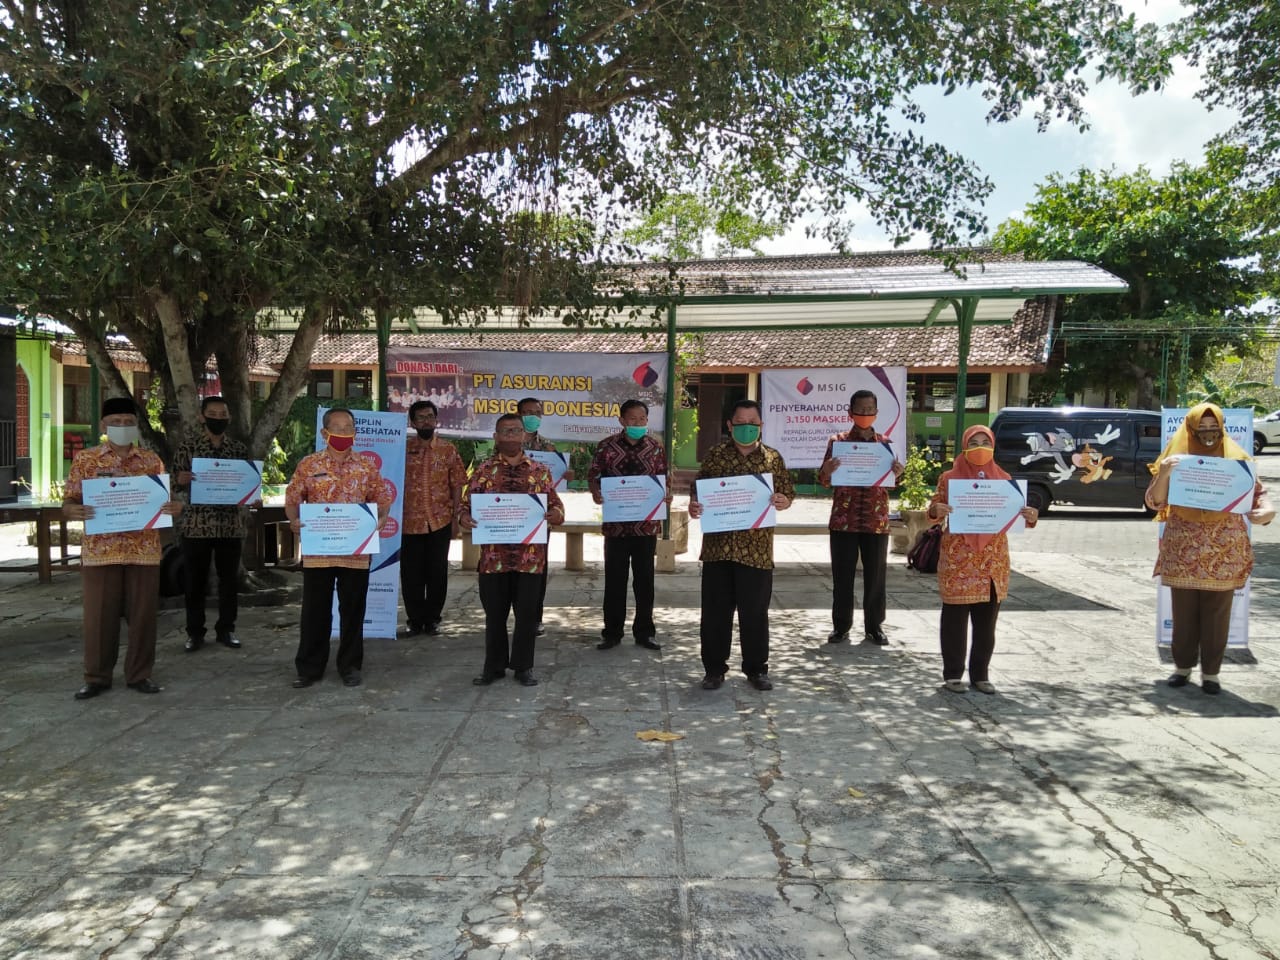 Handover of MSIG Indonesia’ donations to 12 elementary schools representative in Paliyan, Yogyakarta